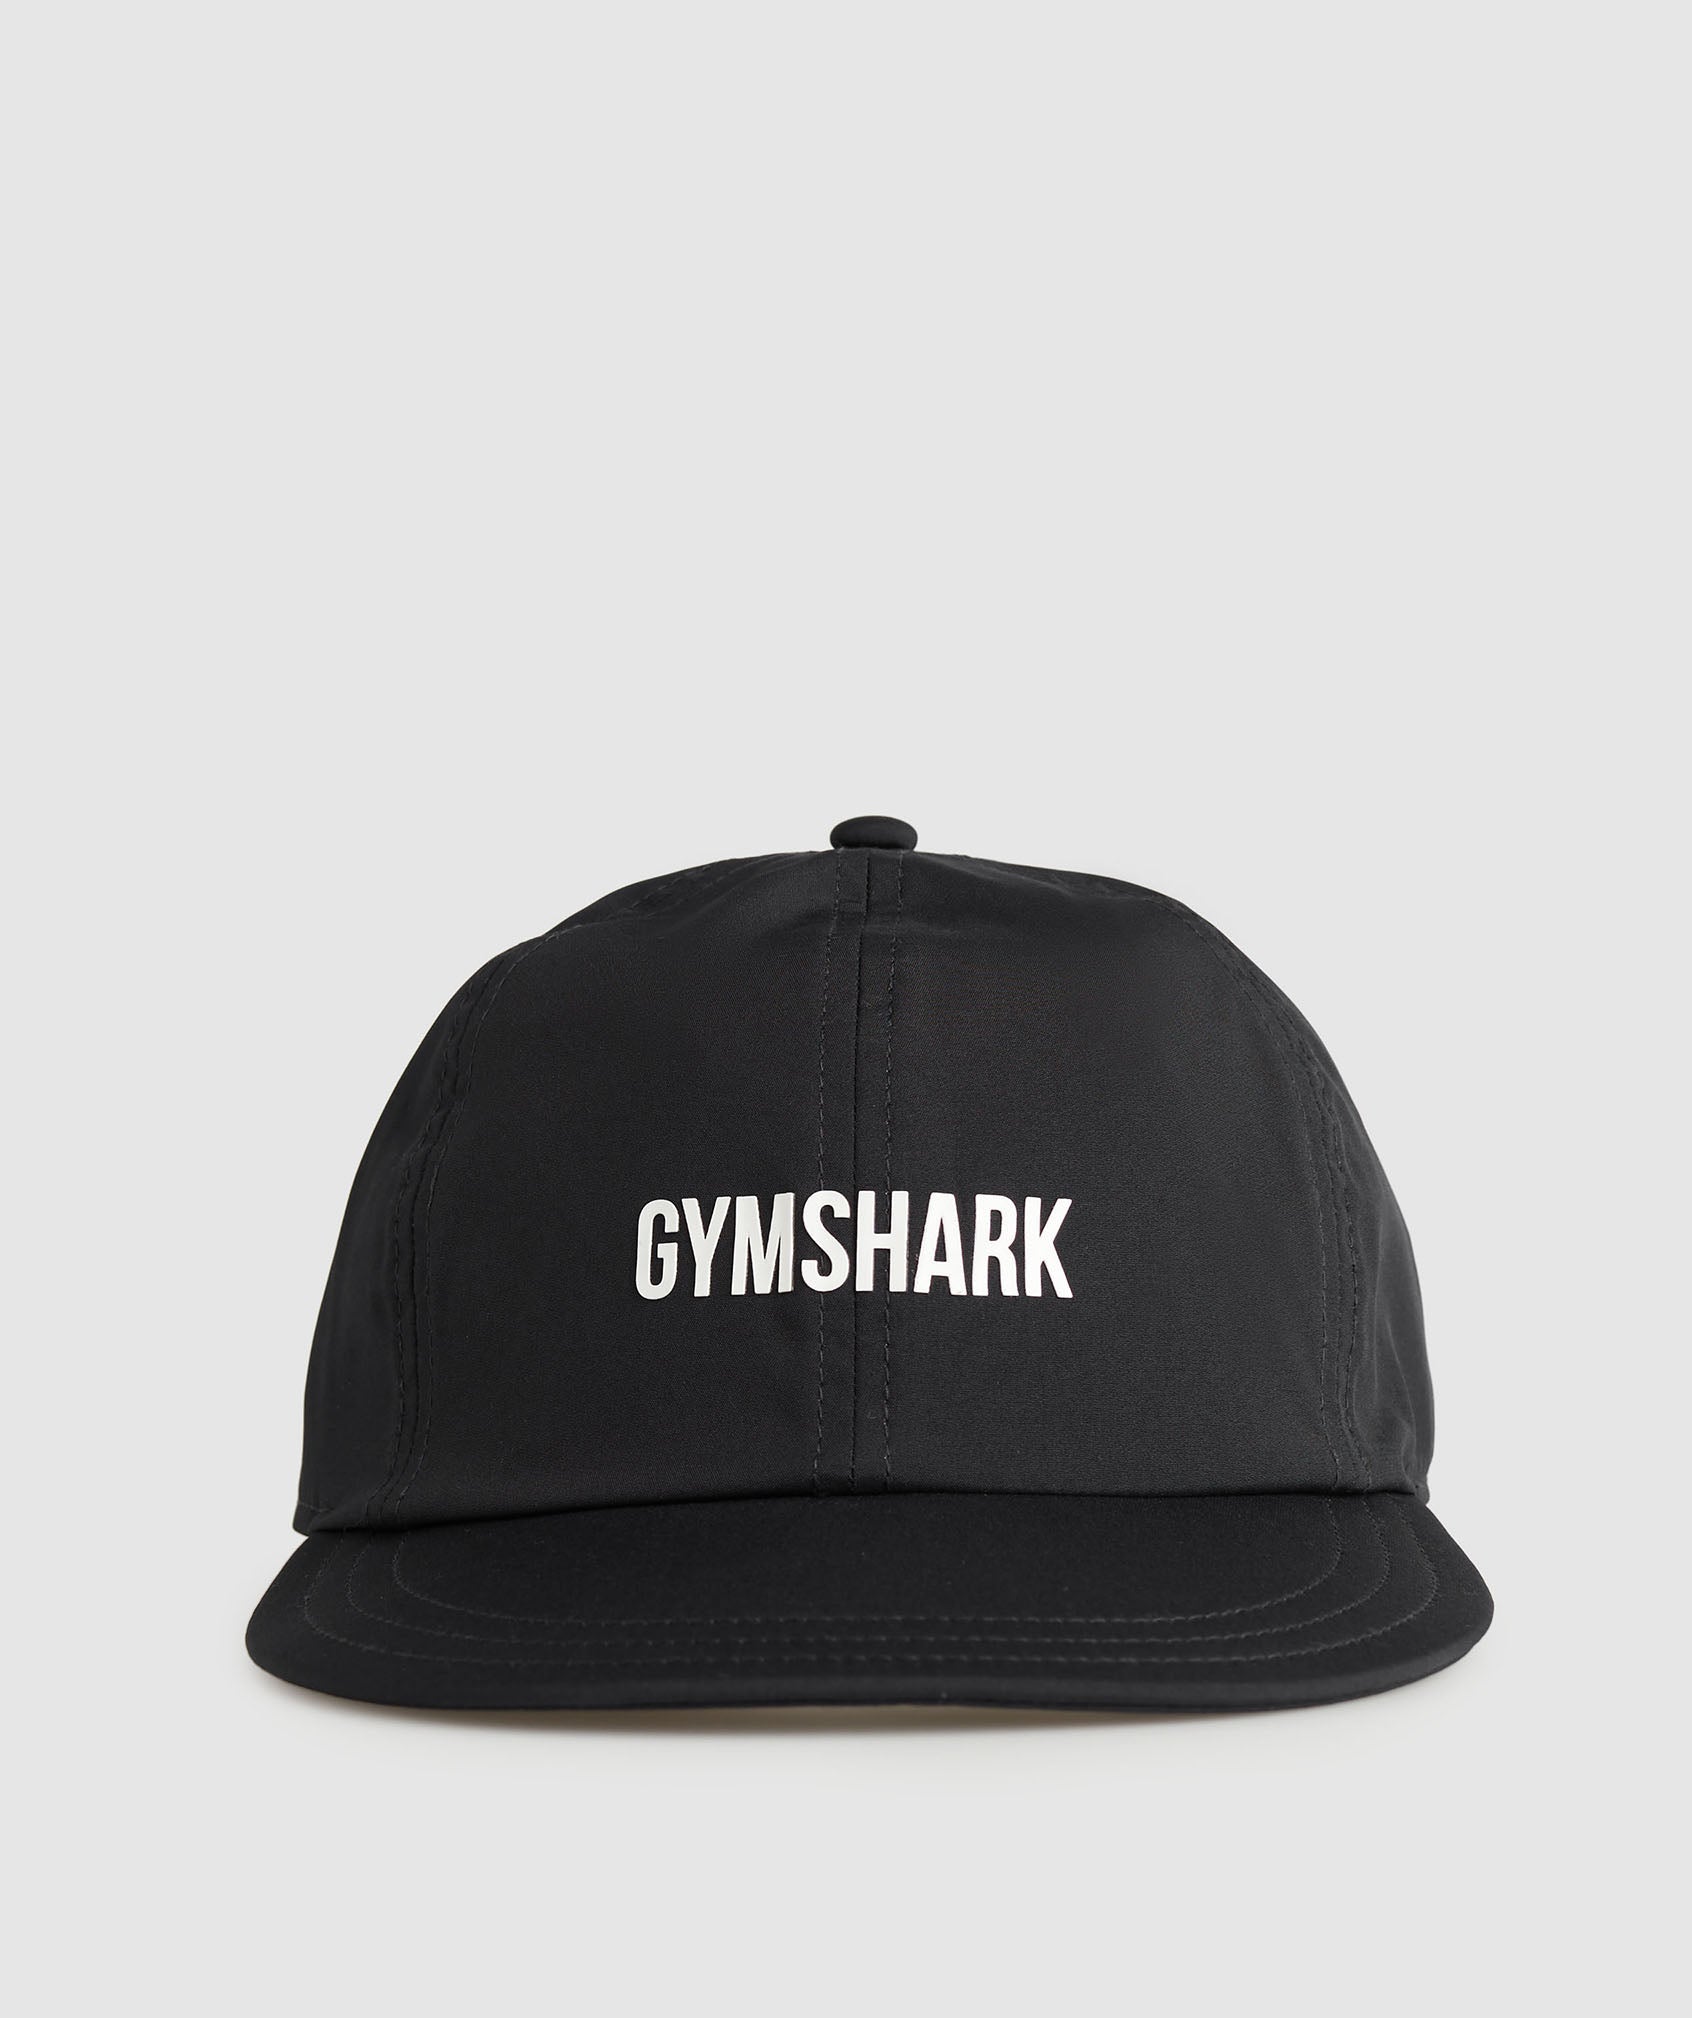 Gymshark Flat Peak Cap - Black